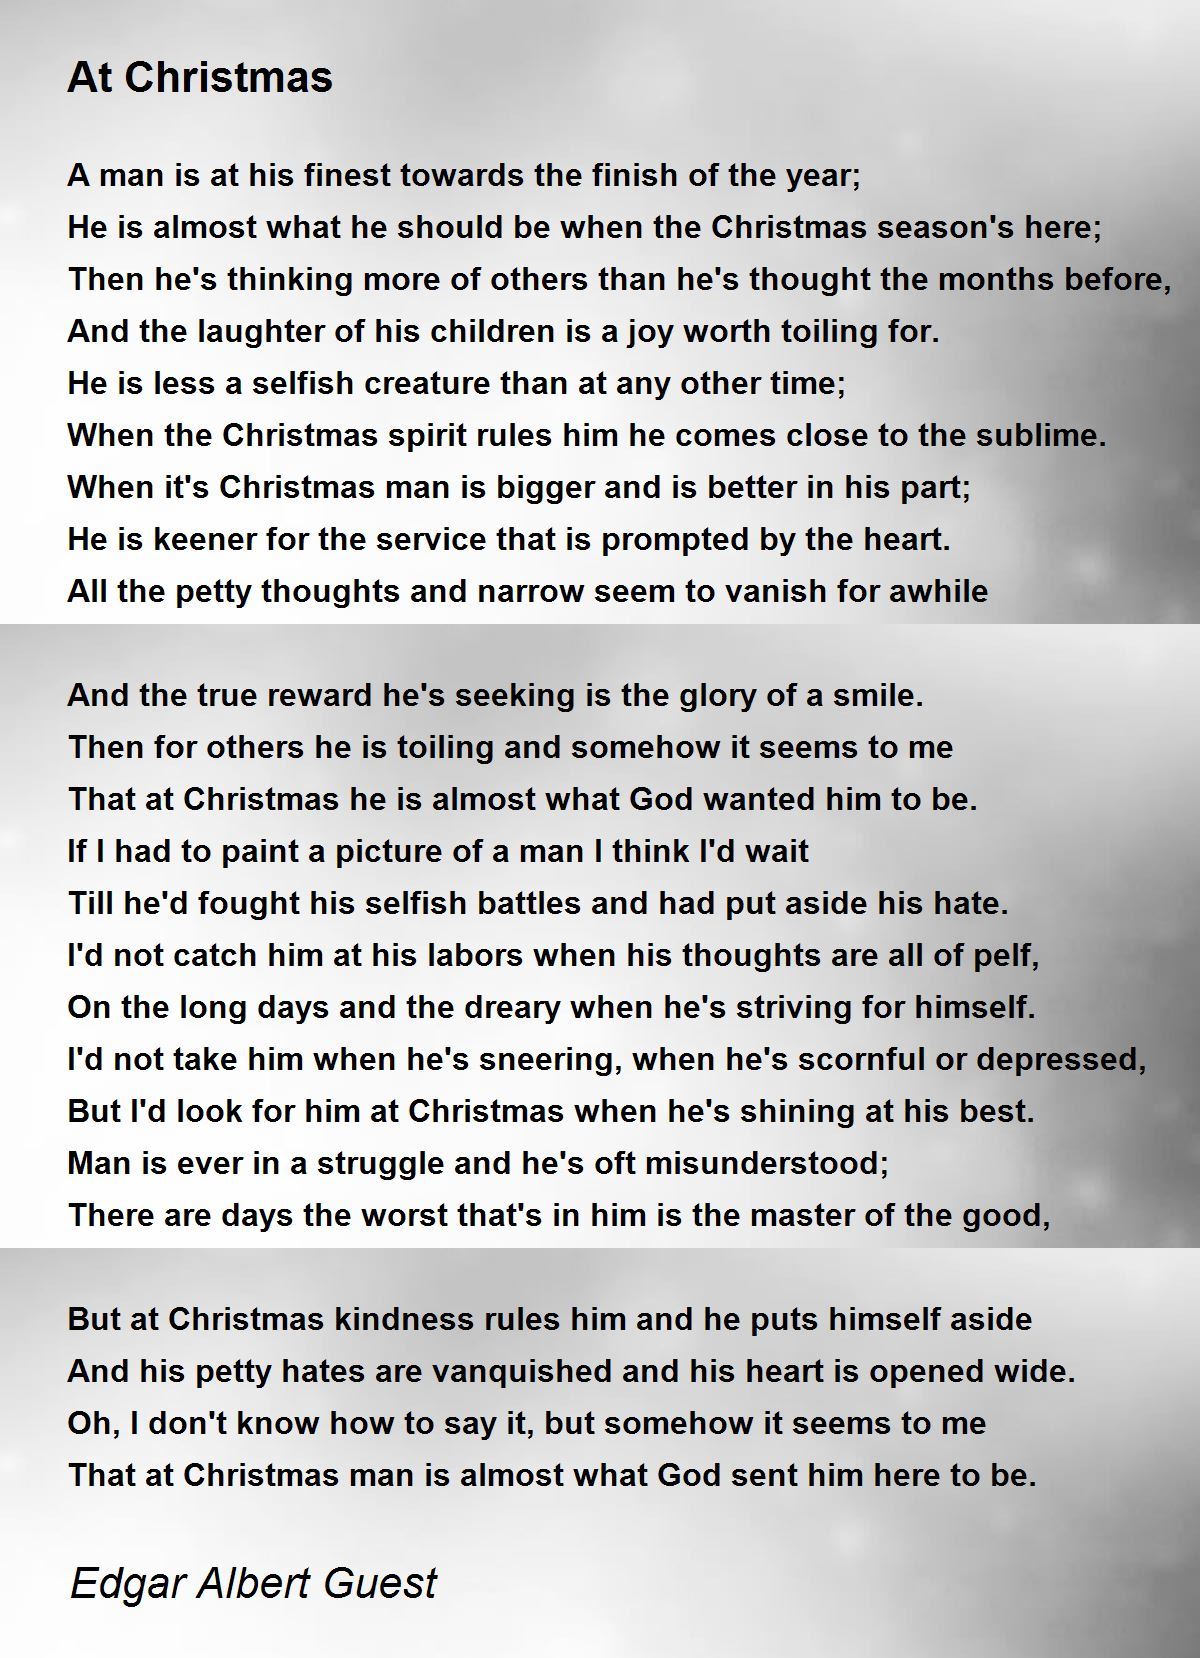 At Christmas Poem by Edgar Albert Guest - Poem Hunter